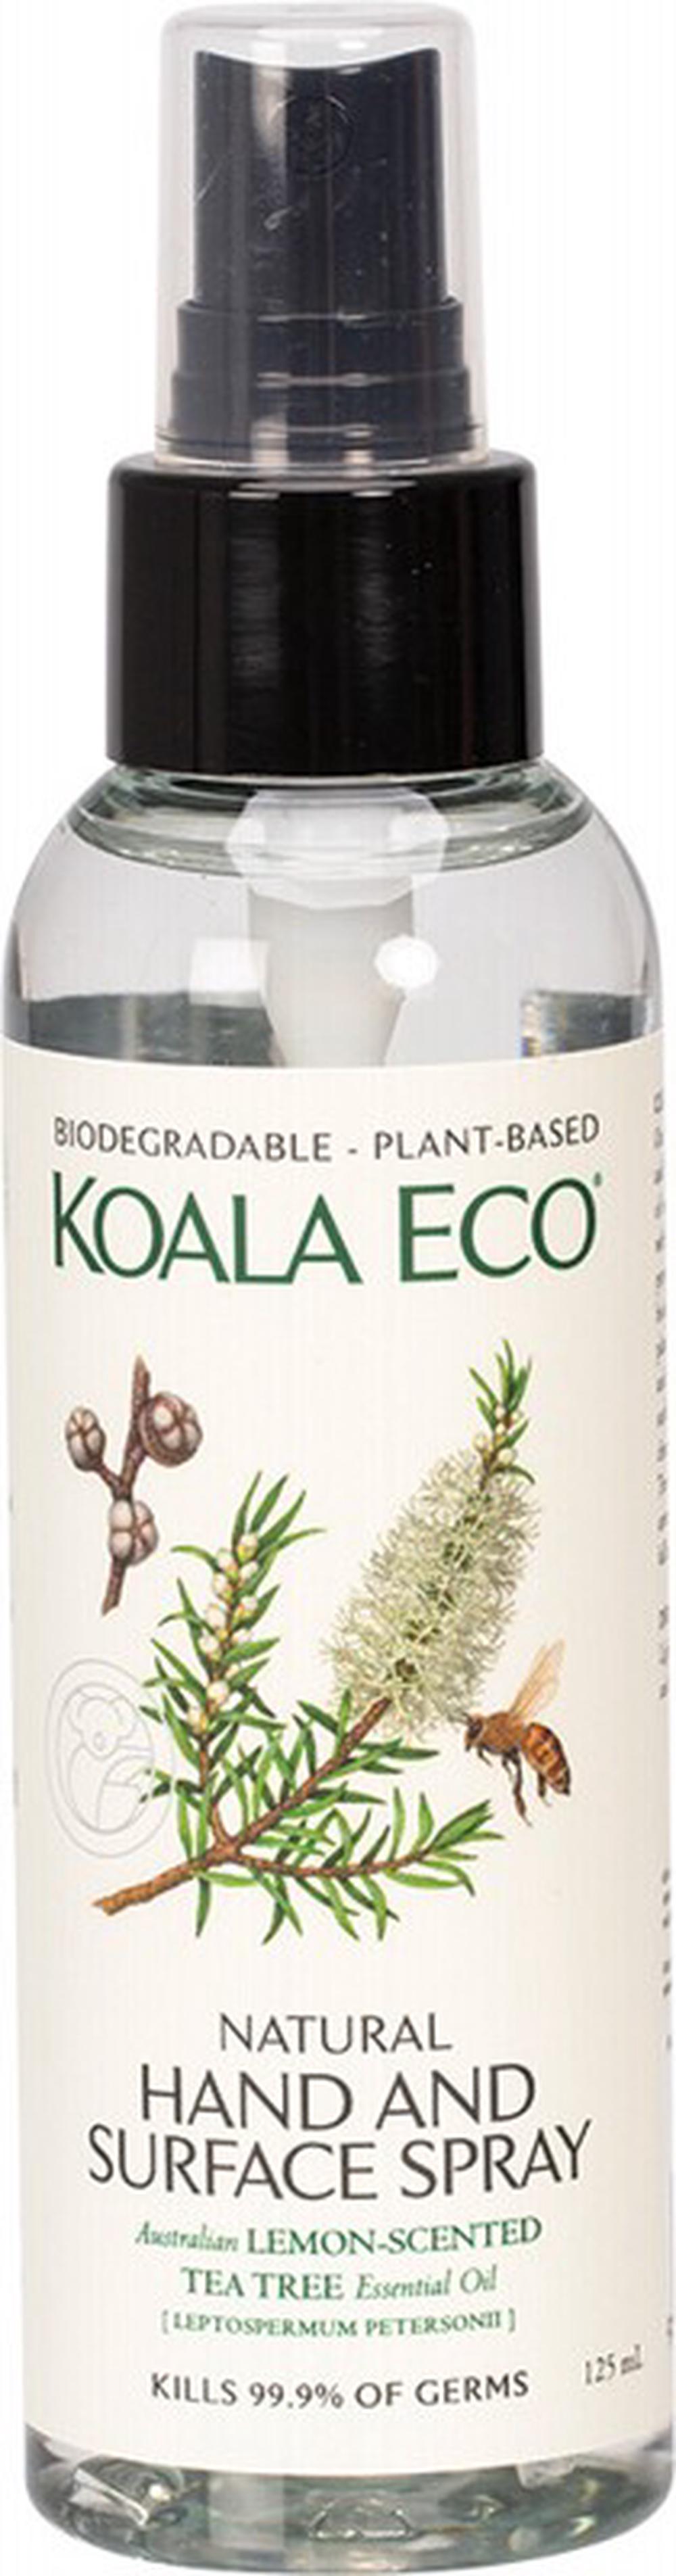 Koala Eco - Natural Dish Soap Lemon Myrtle & Mandarin